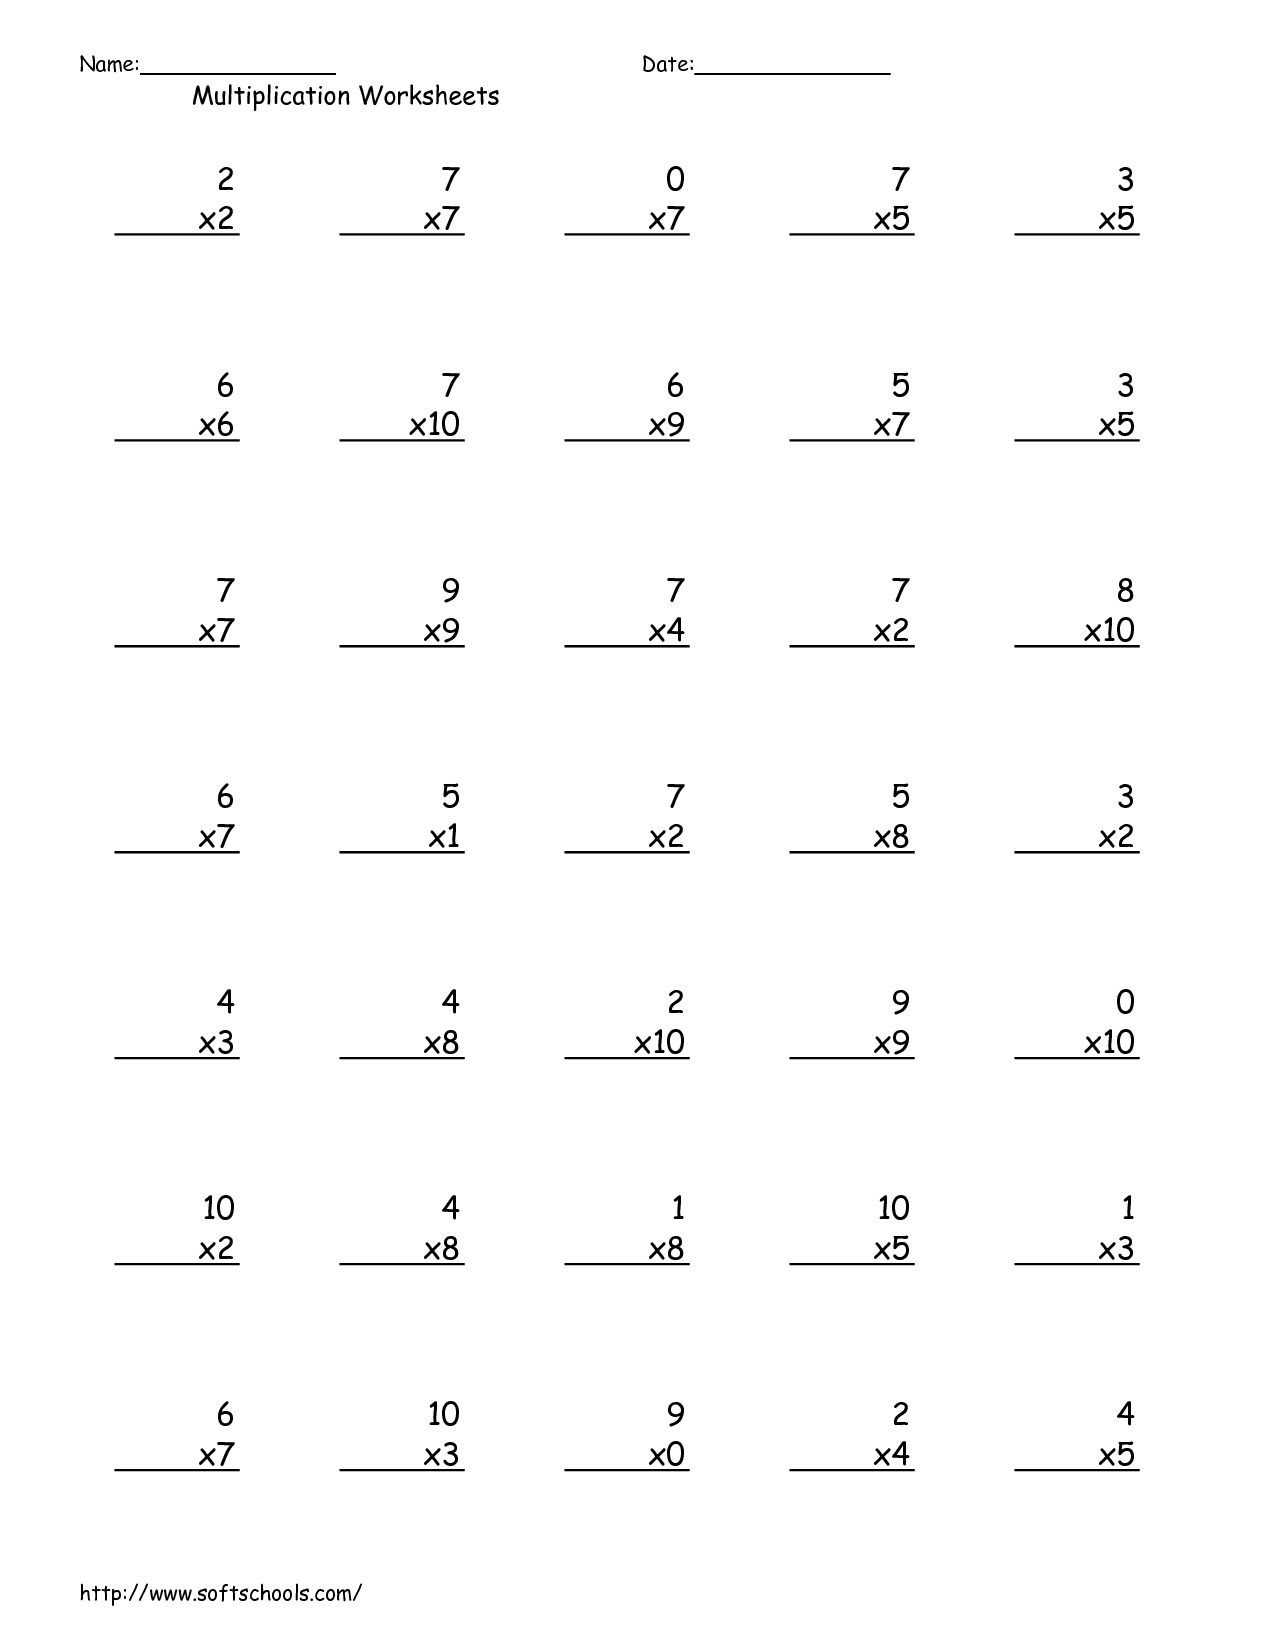 Multiplication Worksheet X2